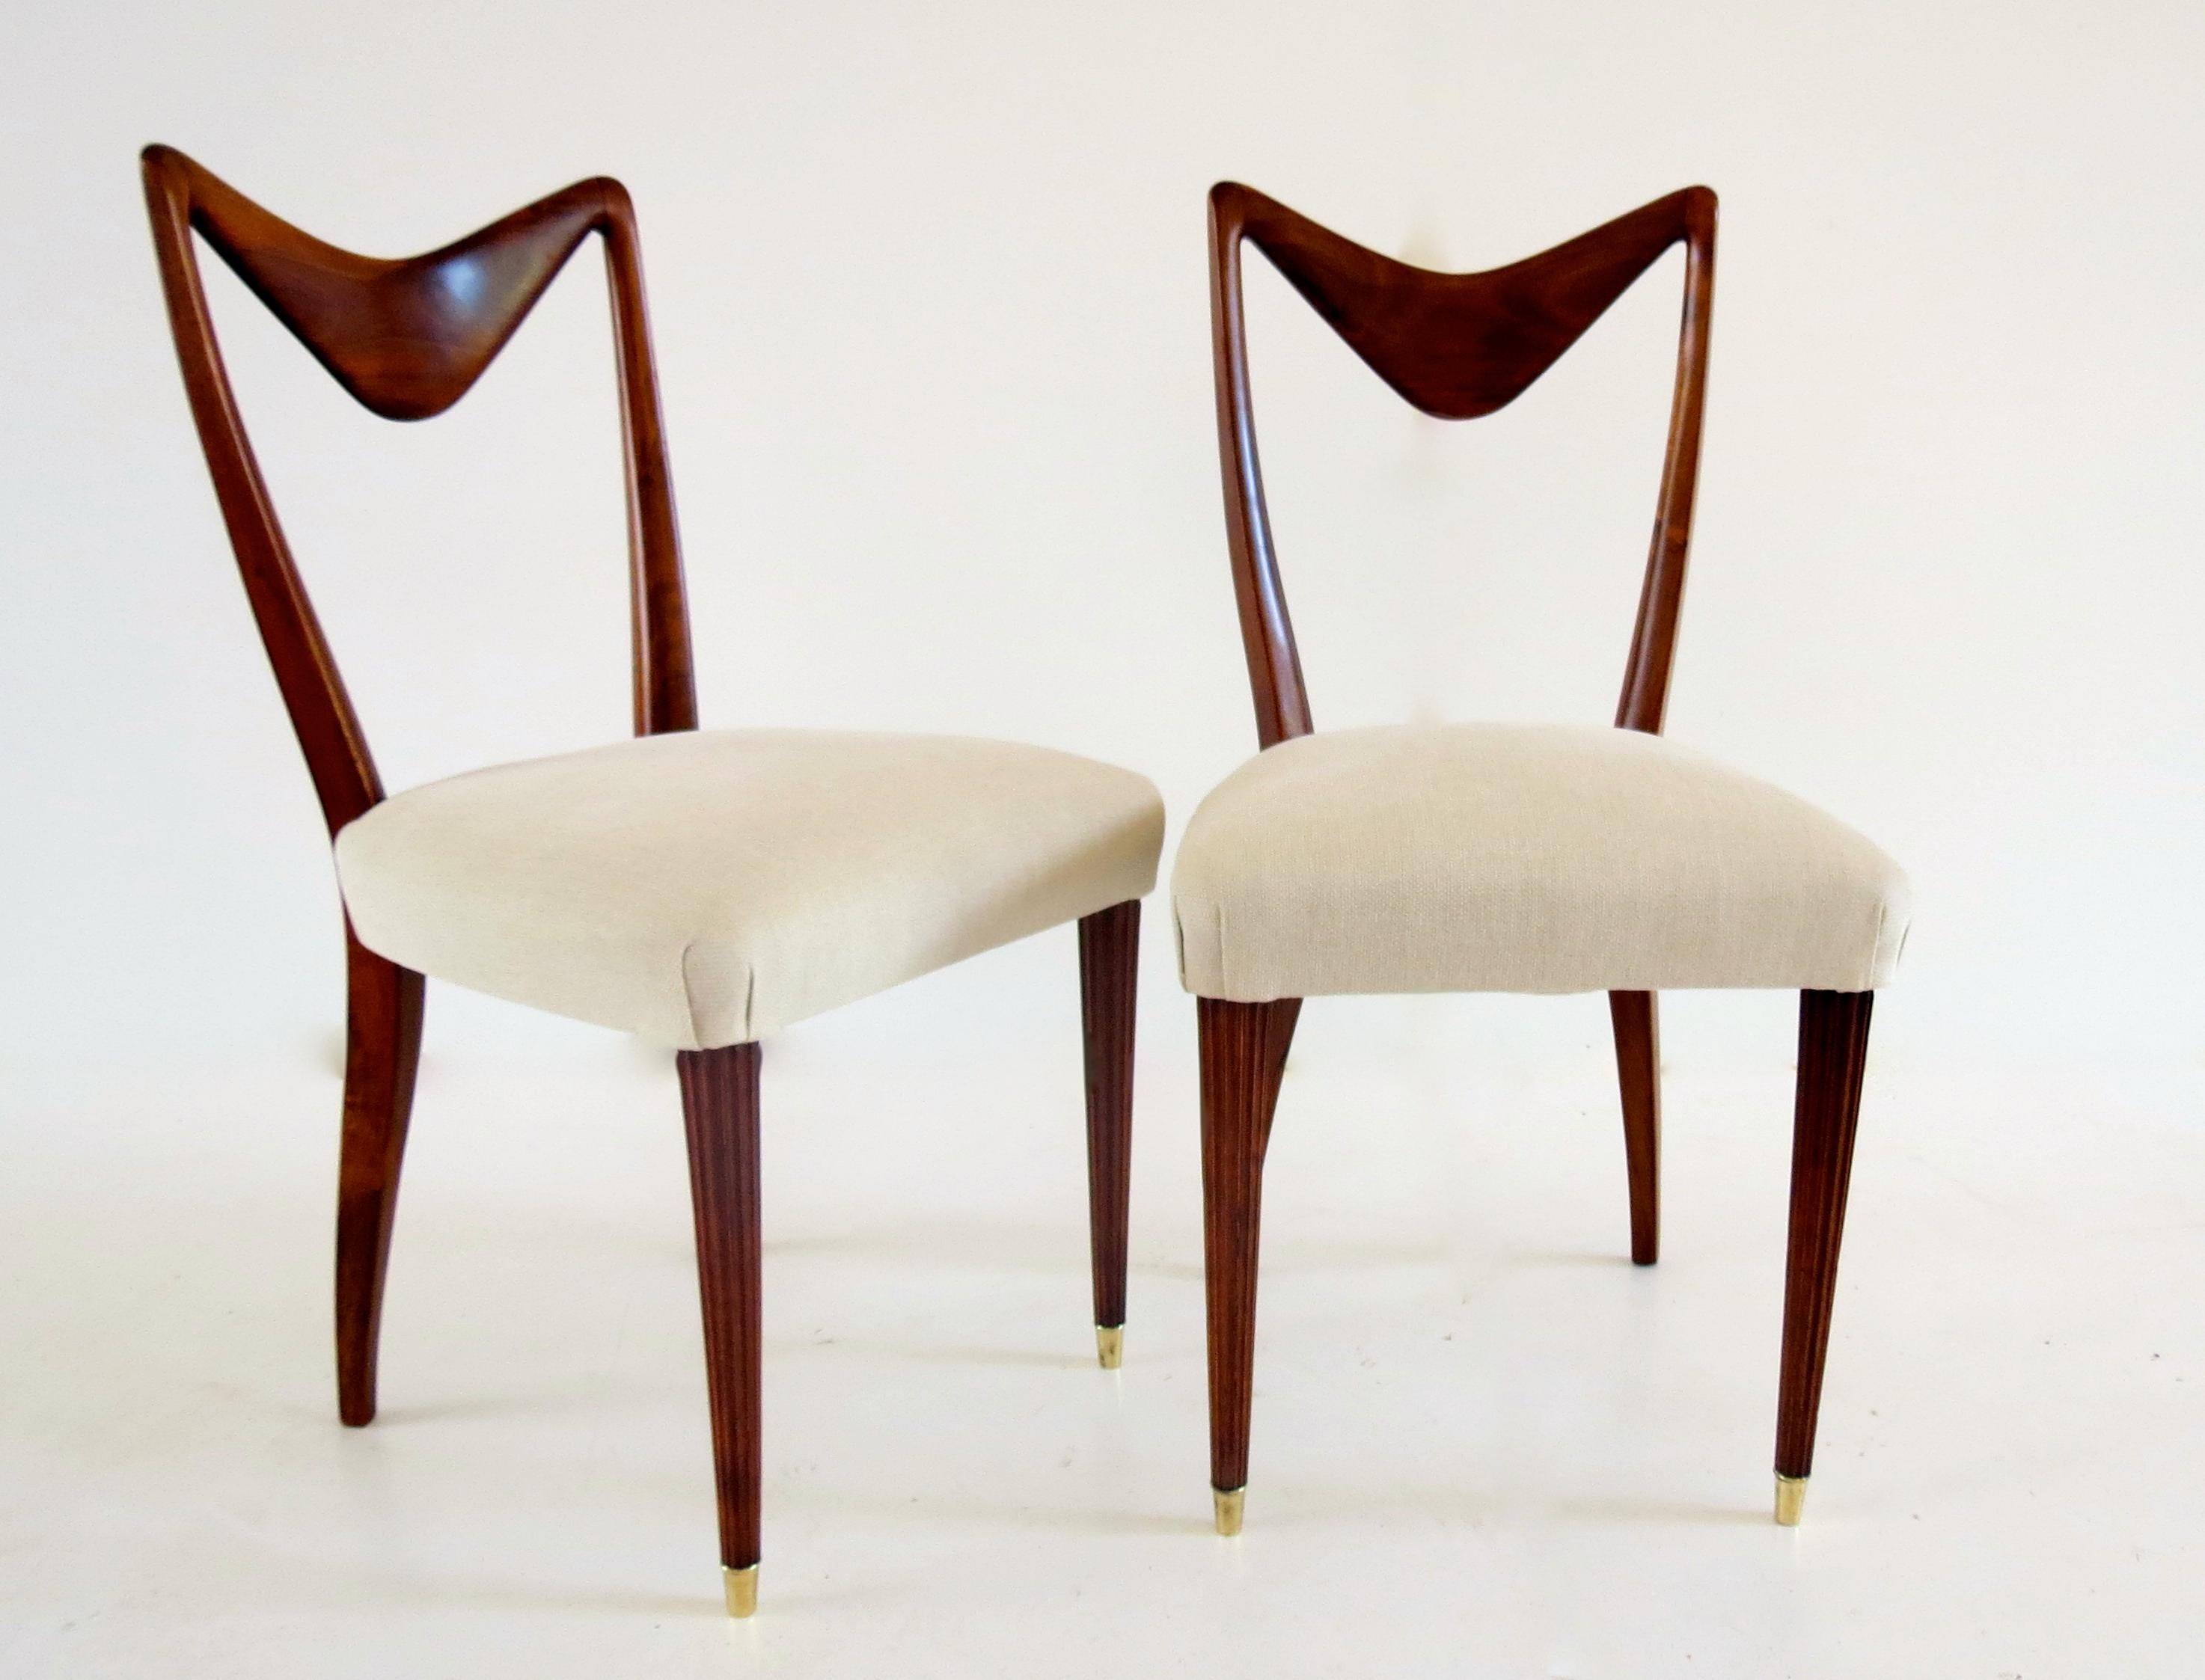 Italian Set of Seven Walnut Dining Room Chairs by Arch, Carlo Enrico Rava, Milano, 1940